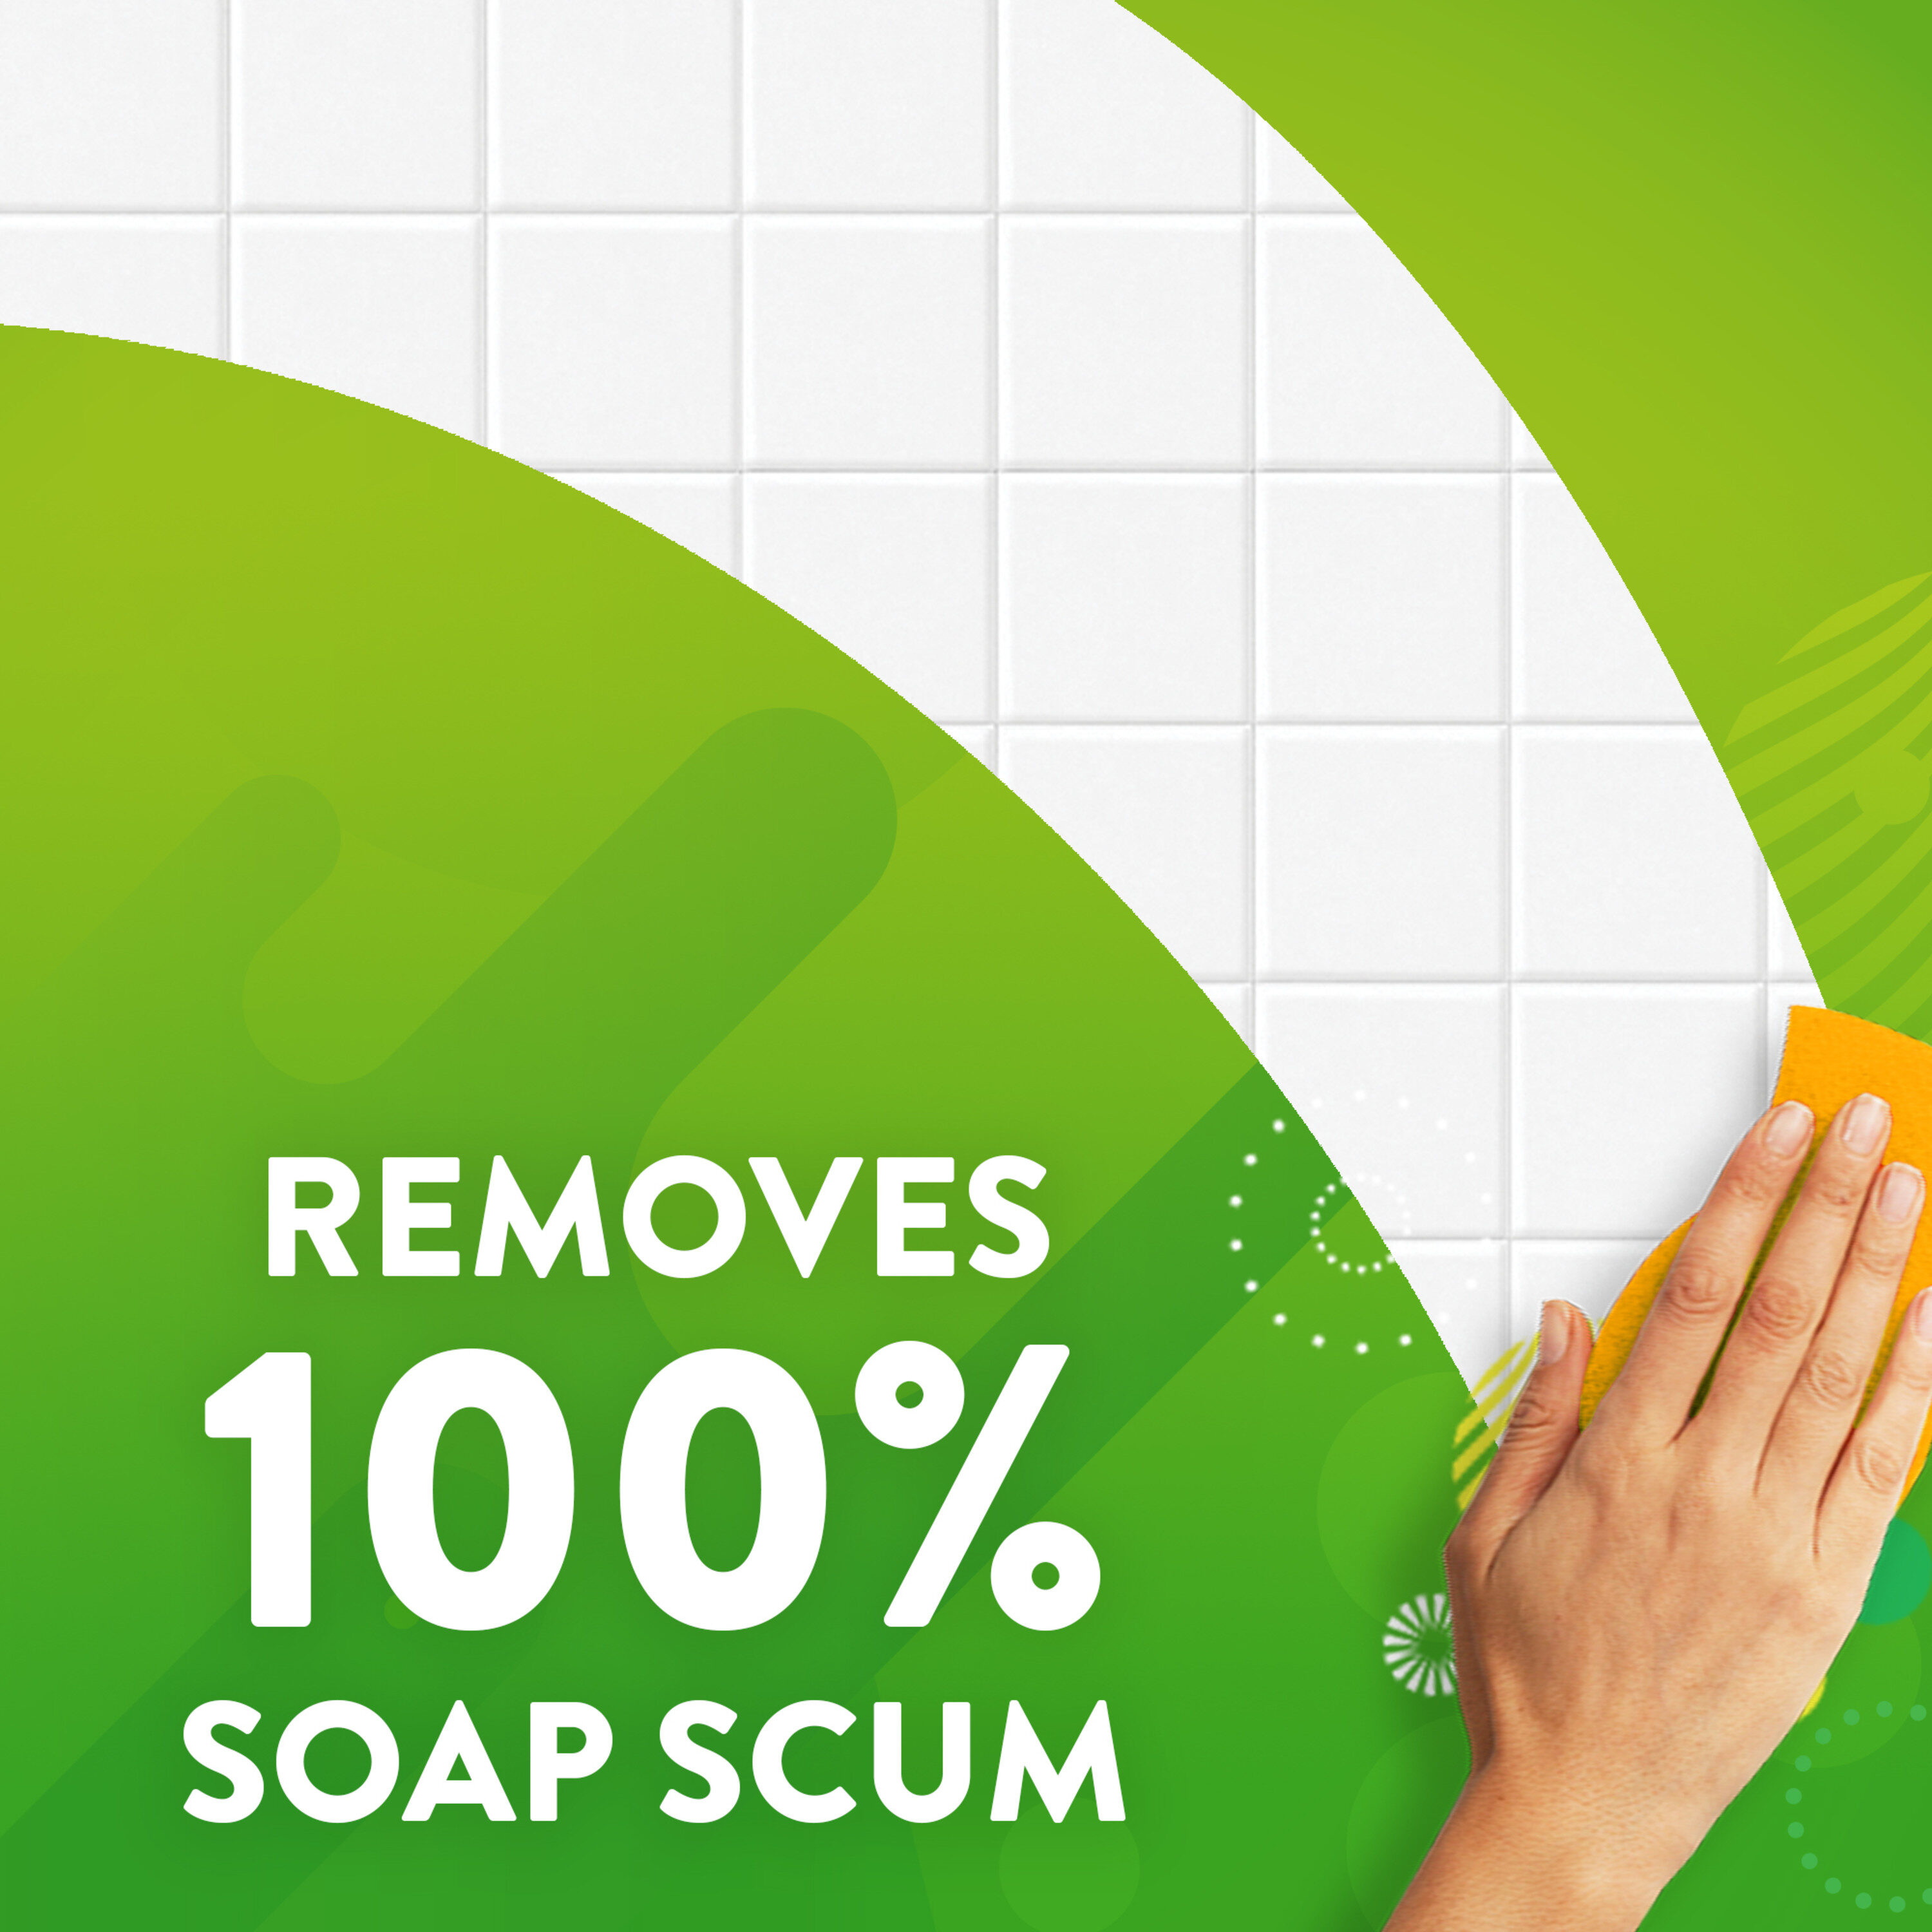 SC Johnson Scrubbing Bubbles® 313358 25 oz. Foaming Disinfectant Bathroom  Cleaner